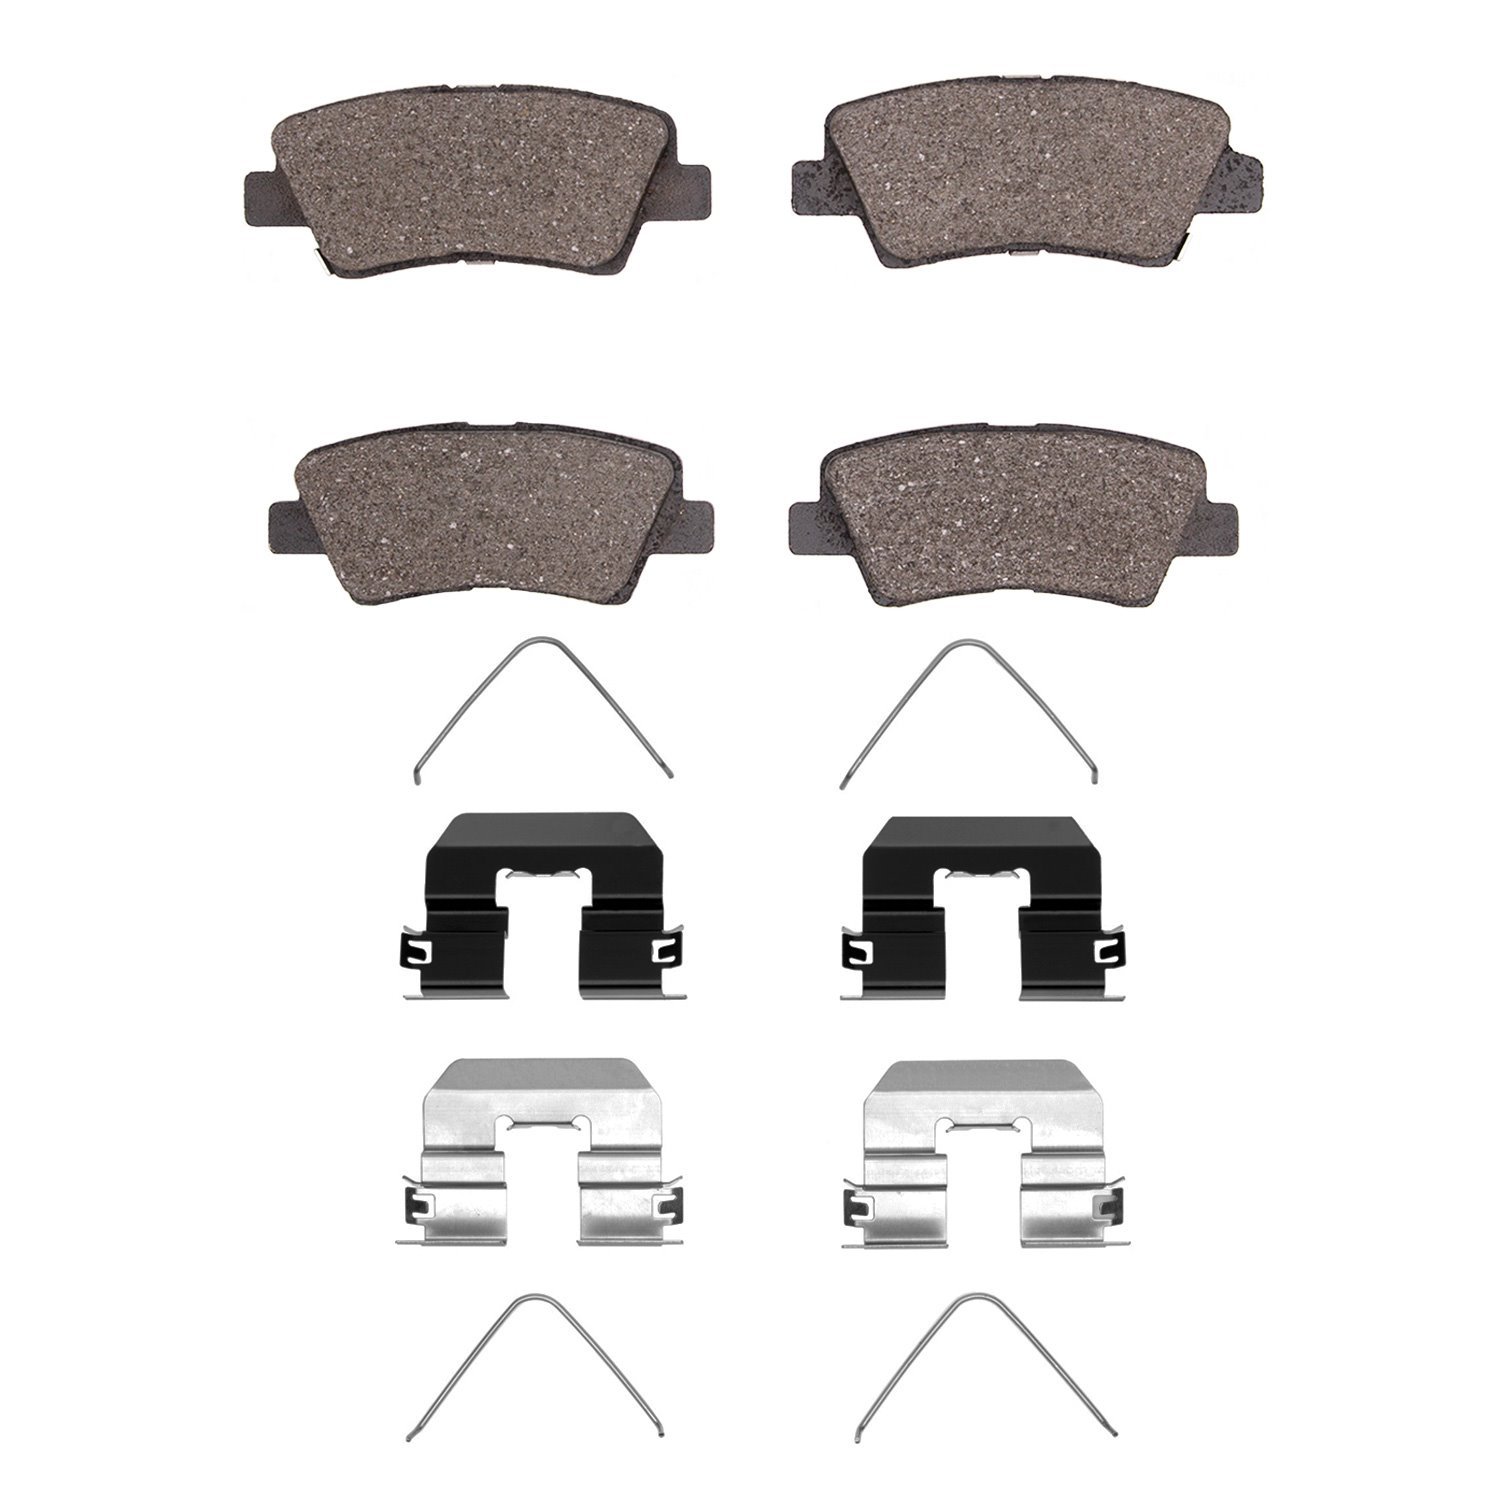 1310-1848-01 3000-Series Ceramic Brake Pads & Hardware Kit, Fits Select Kia/Hyundai/Genesis, Position: Rear